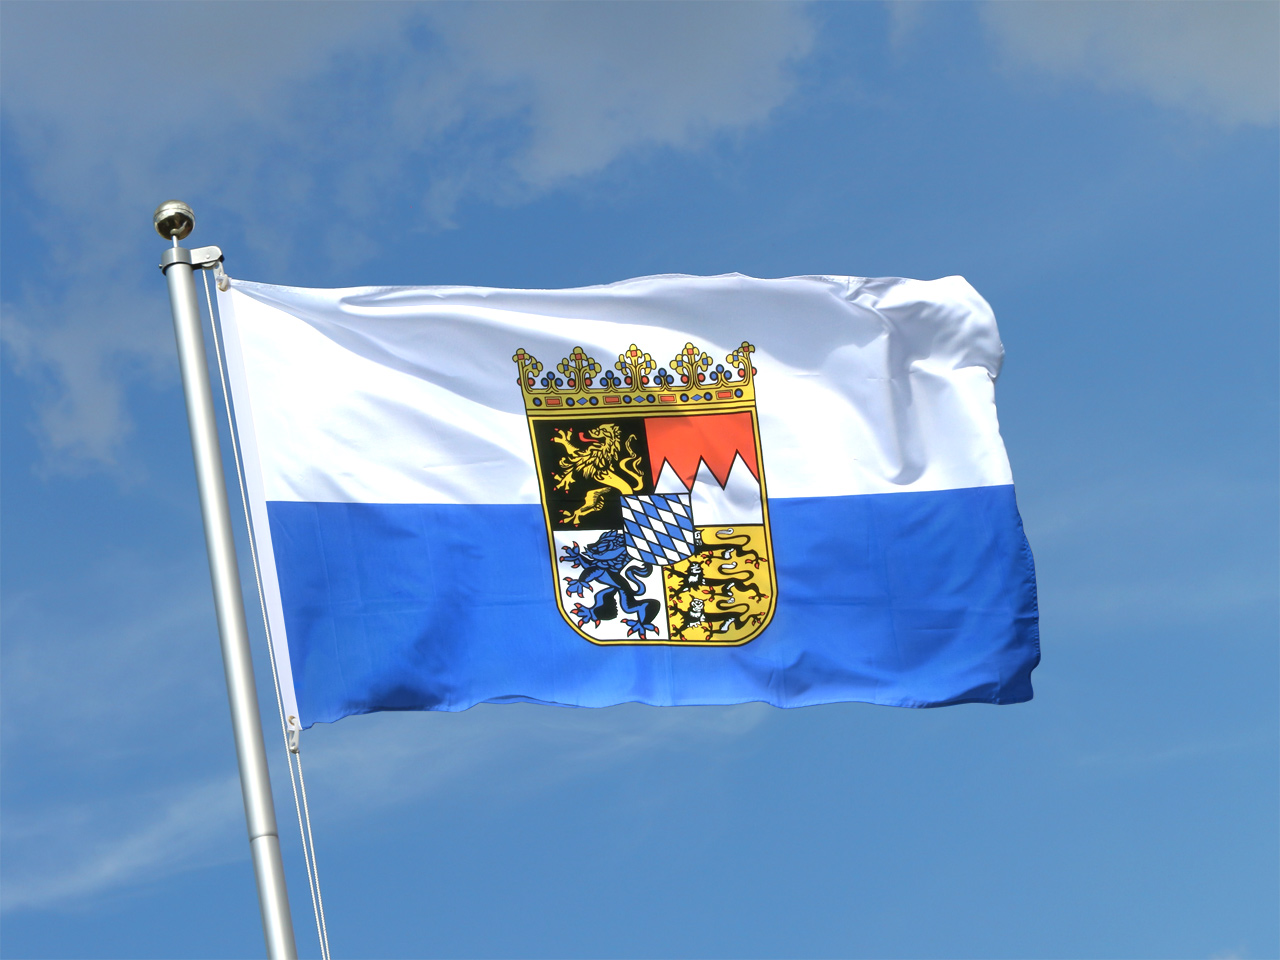 Bavaria Dienstflagge Flag For Sale Buy At Royal Flags